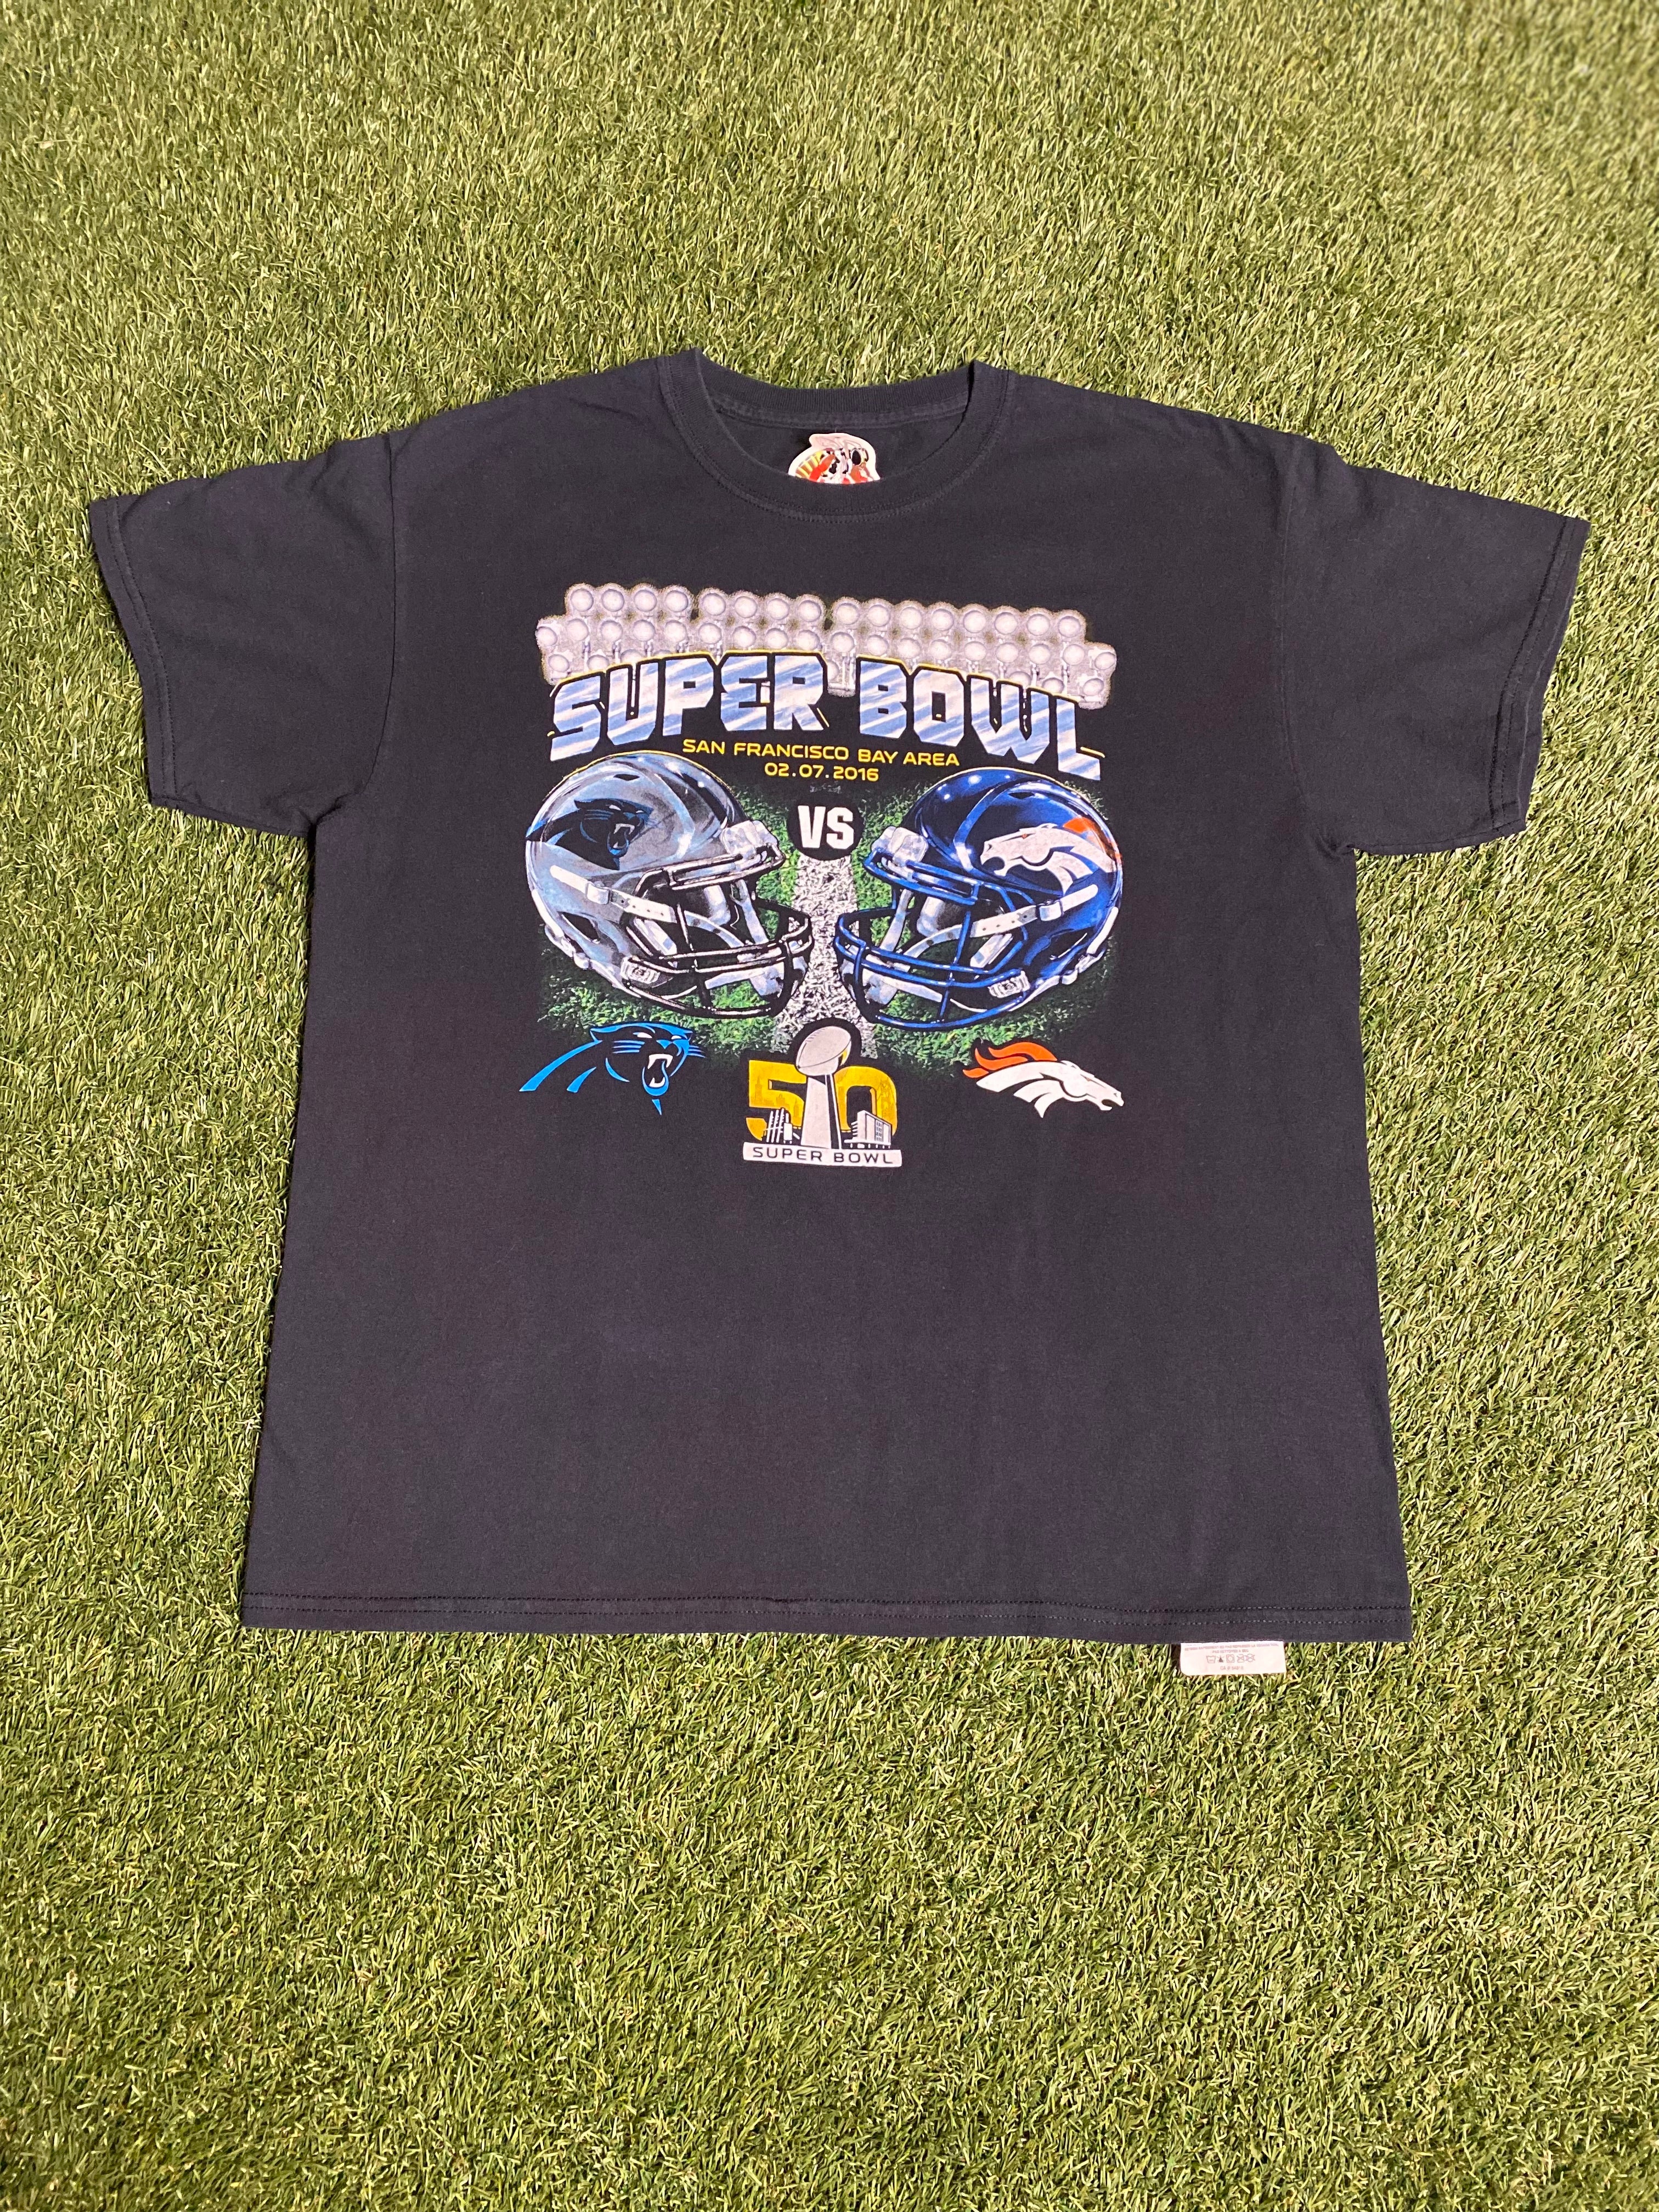 "Super Bowl L" Limited Edition T-Shirt